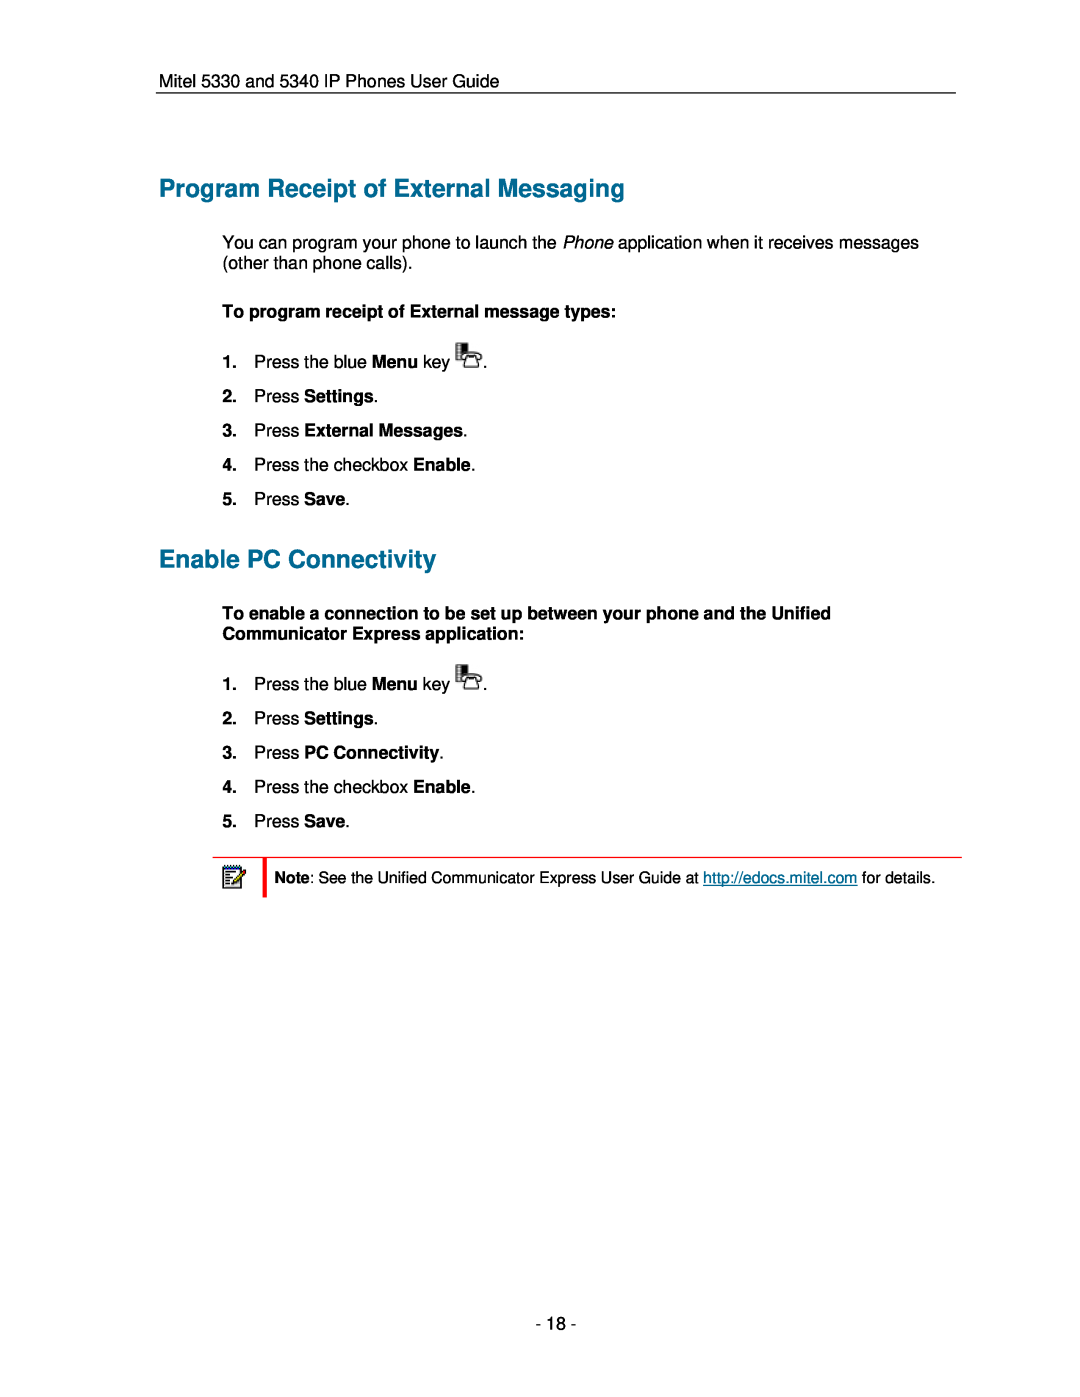 Mitel 5330 Program Receipt of External Messaging, Enable PC Connectivity, To program receipt of External message types 